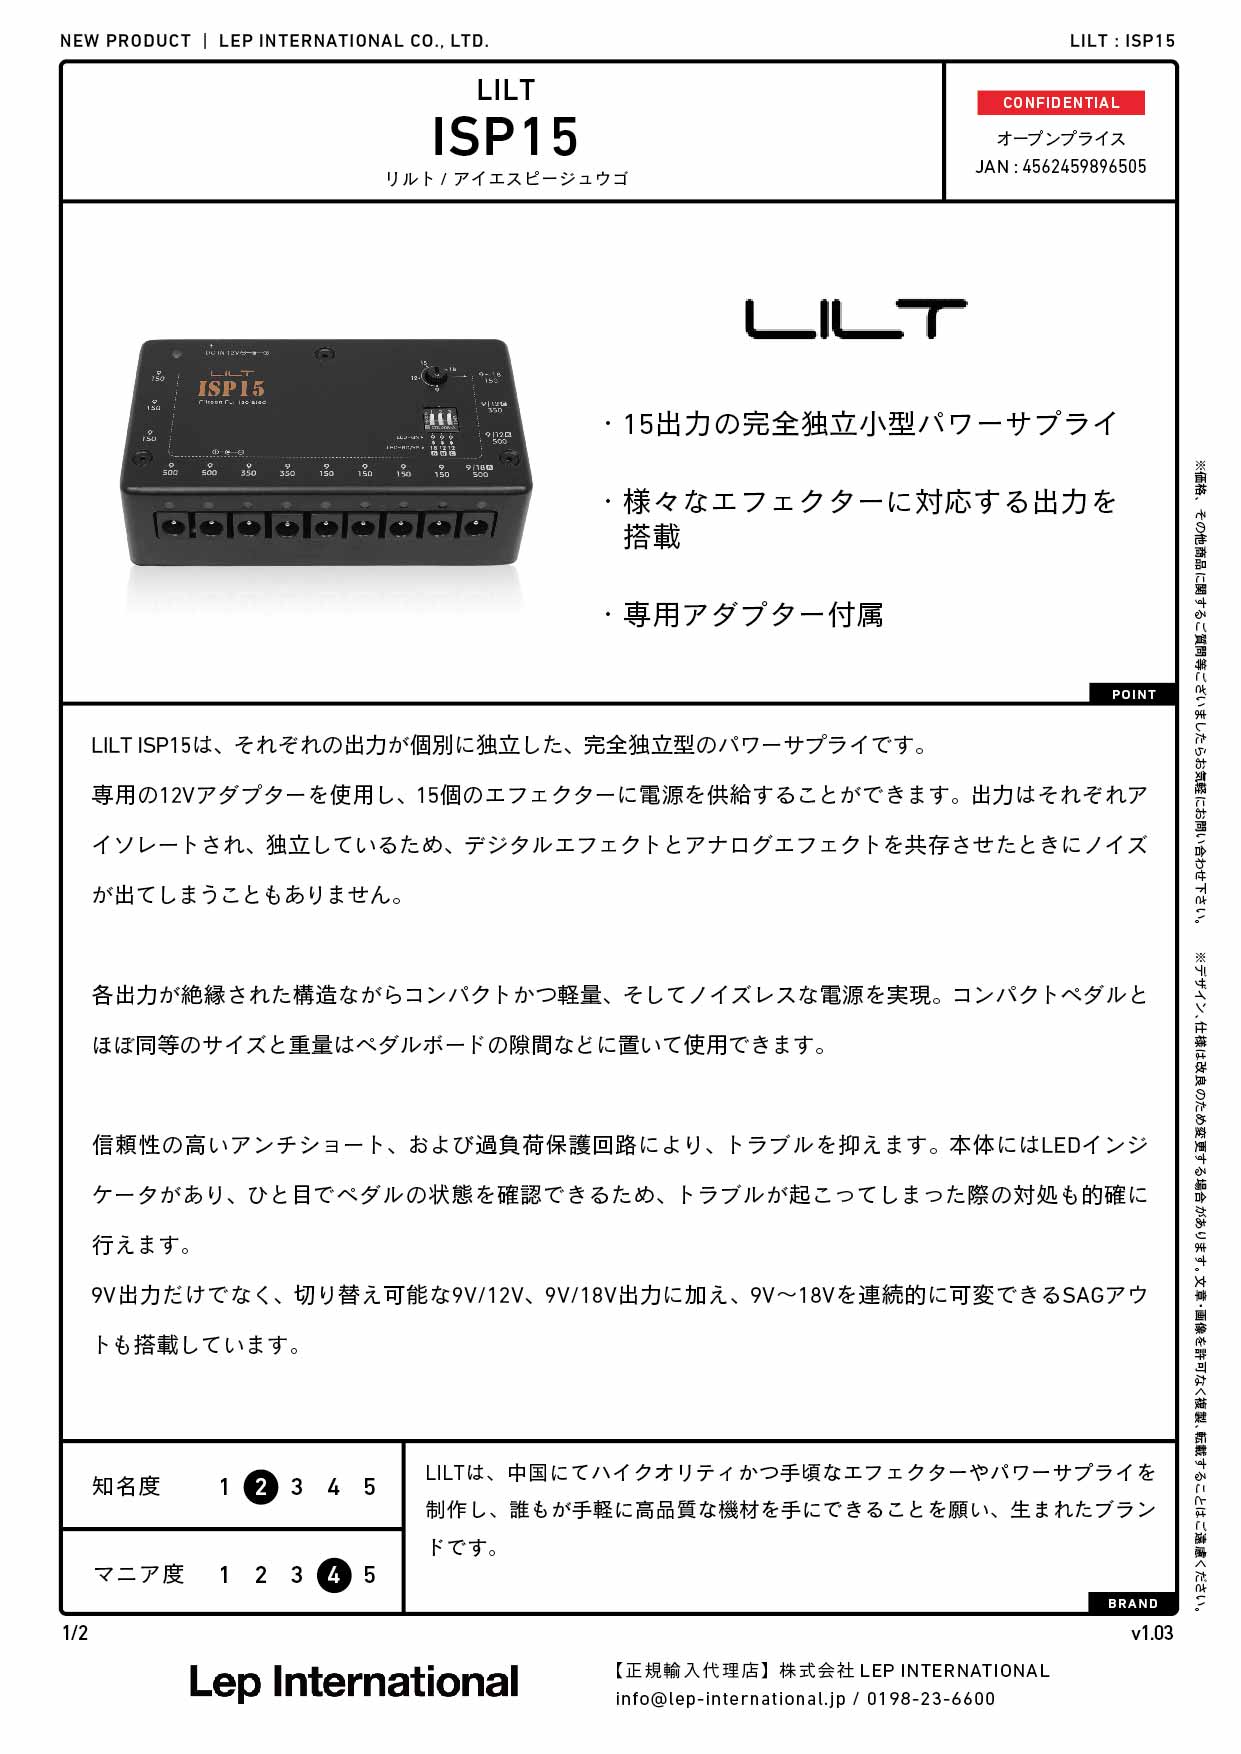 LILT/ISP15